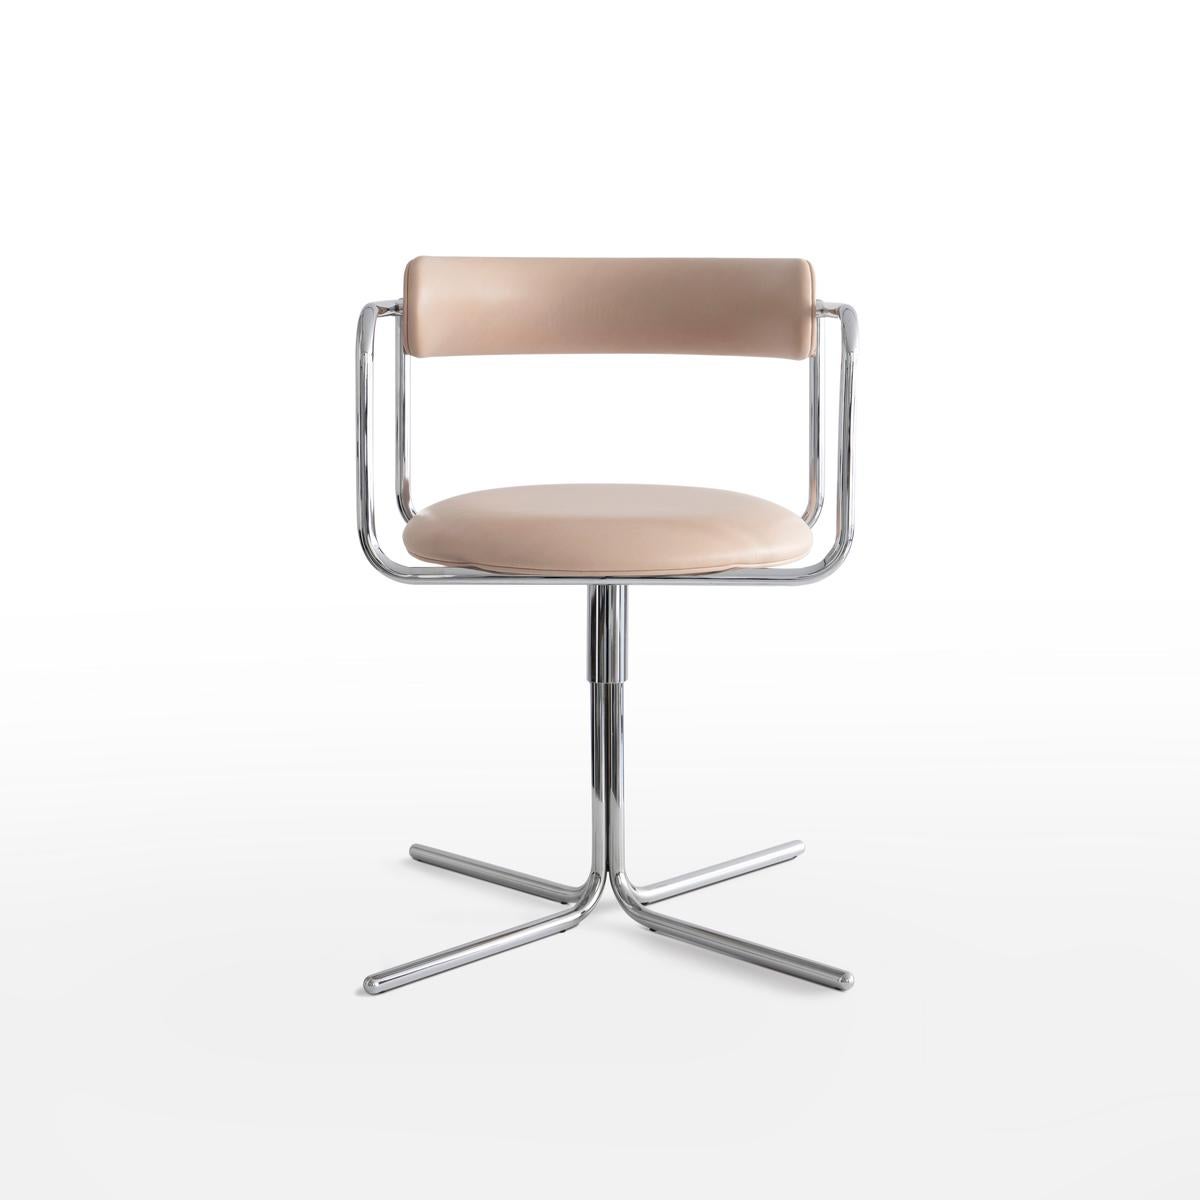 Organic Modern Contemporary Chair 'FF Swivel' Chrome and Leather, Dakar 0197 For Sale